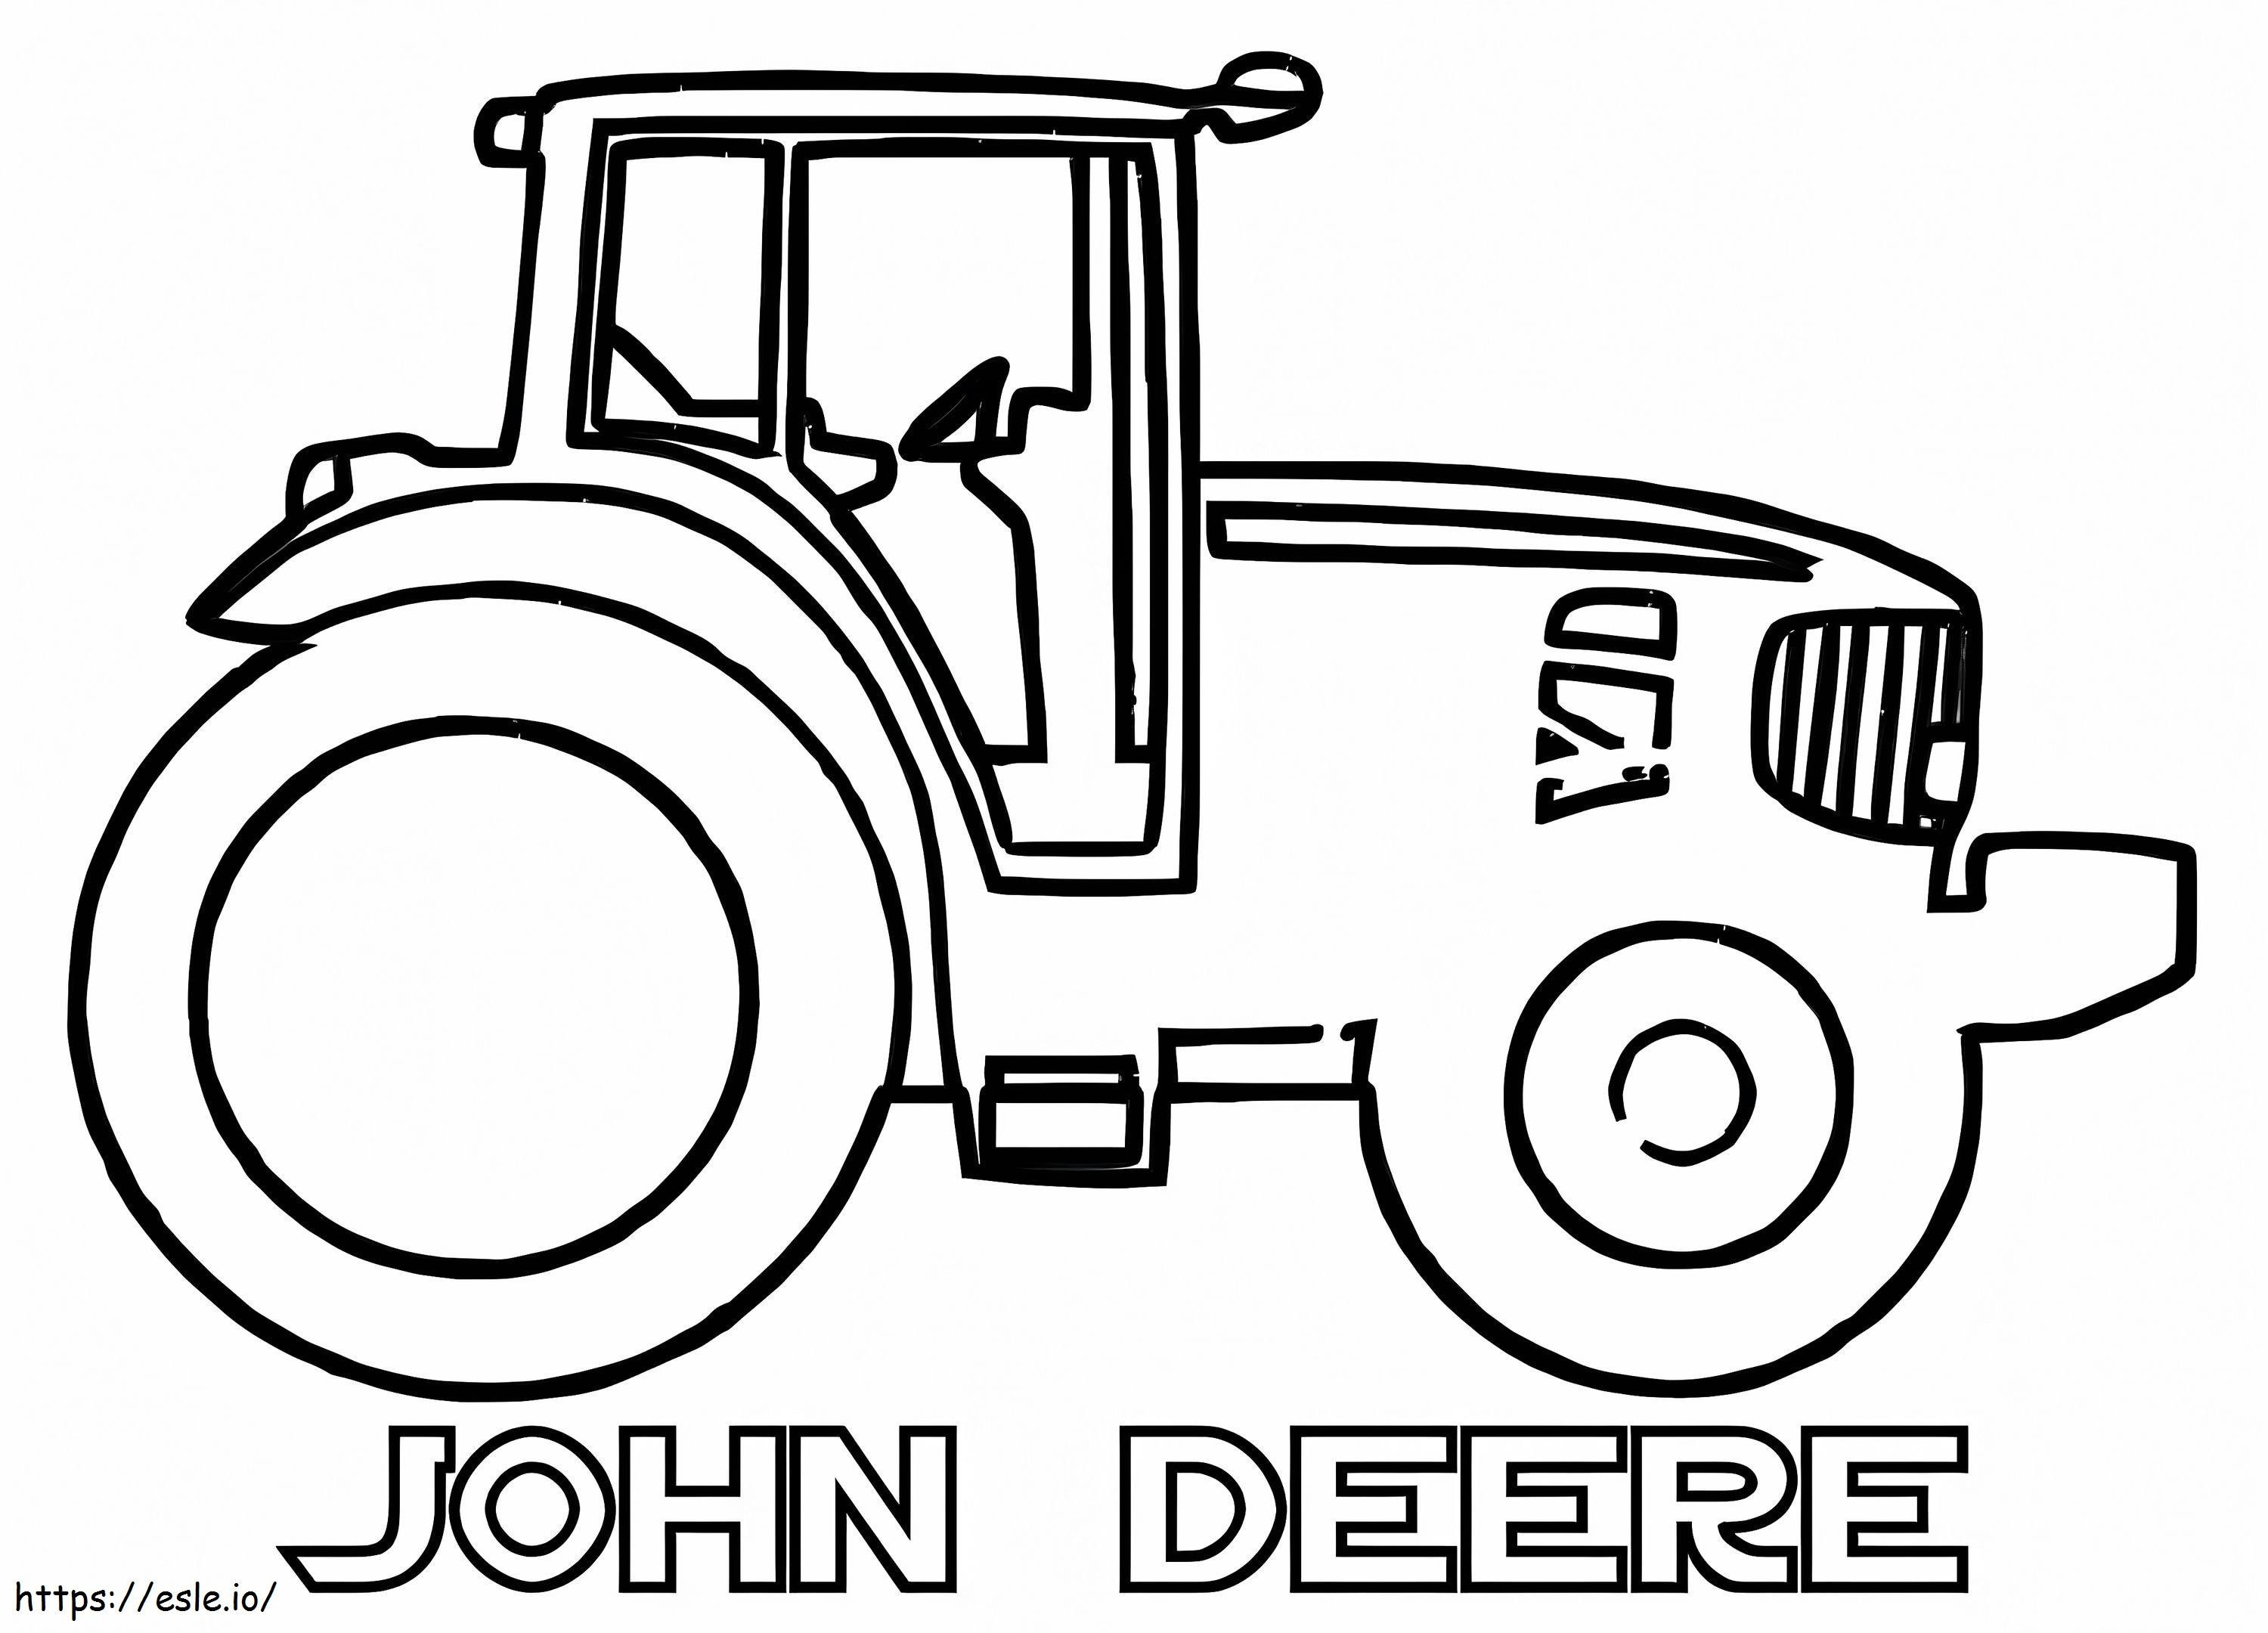 John Deere kolorowanka